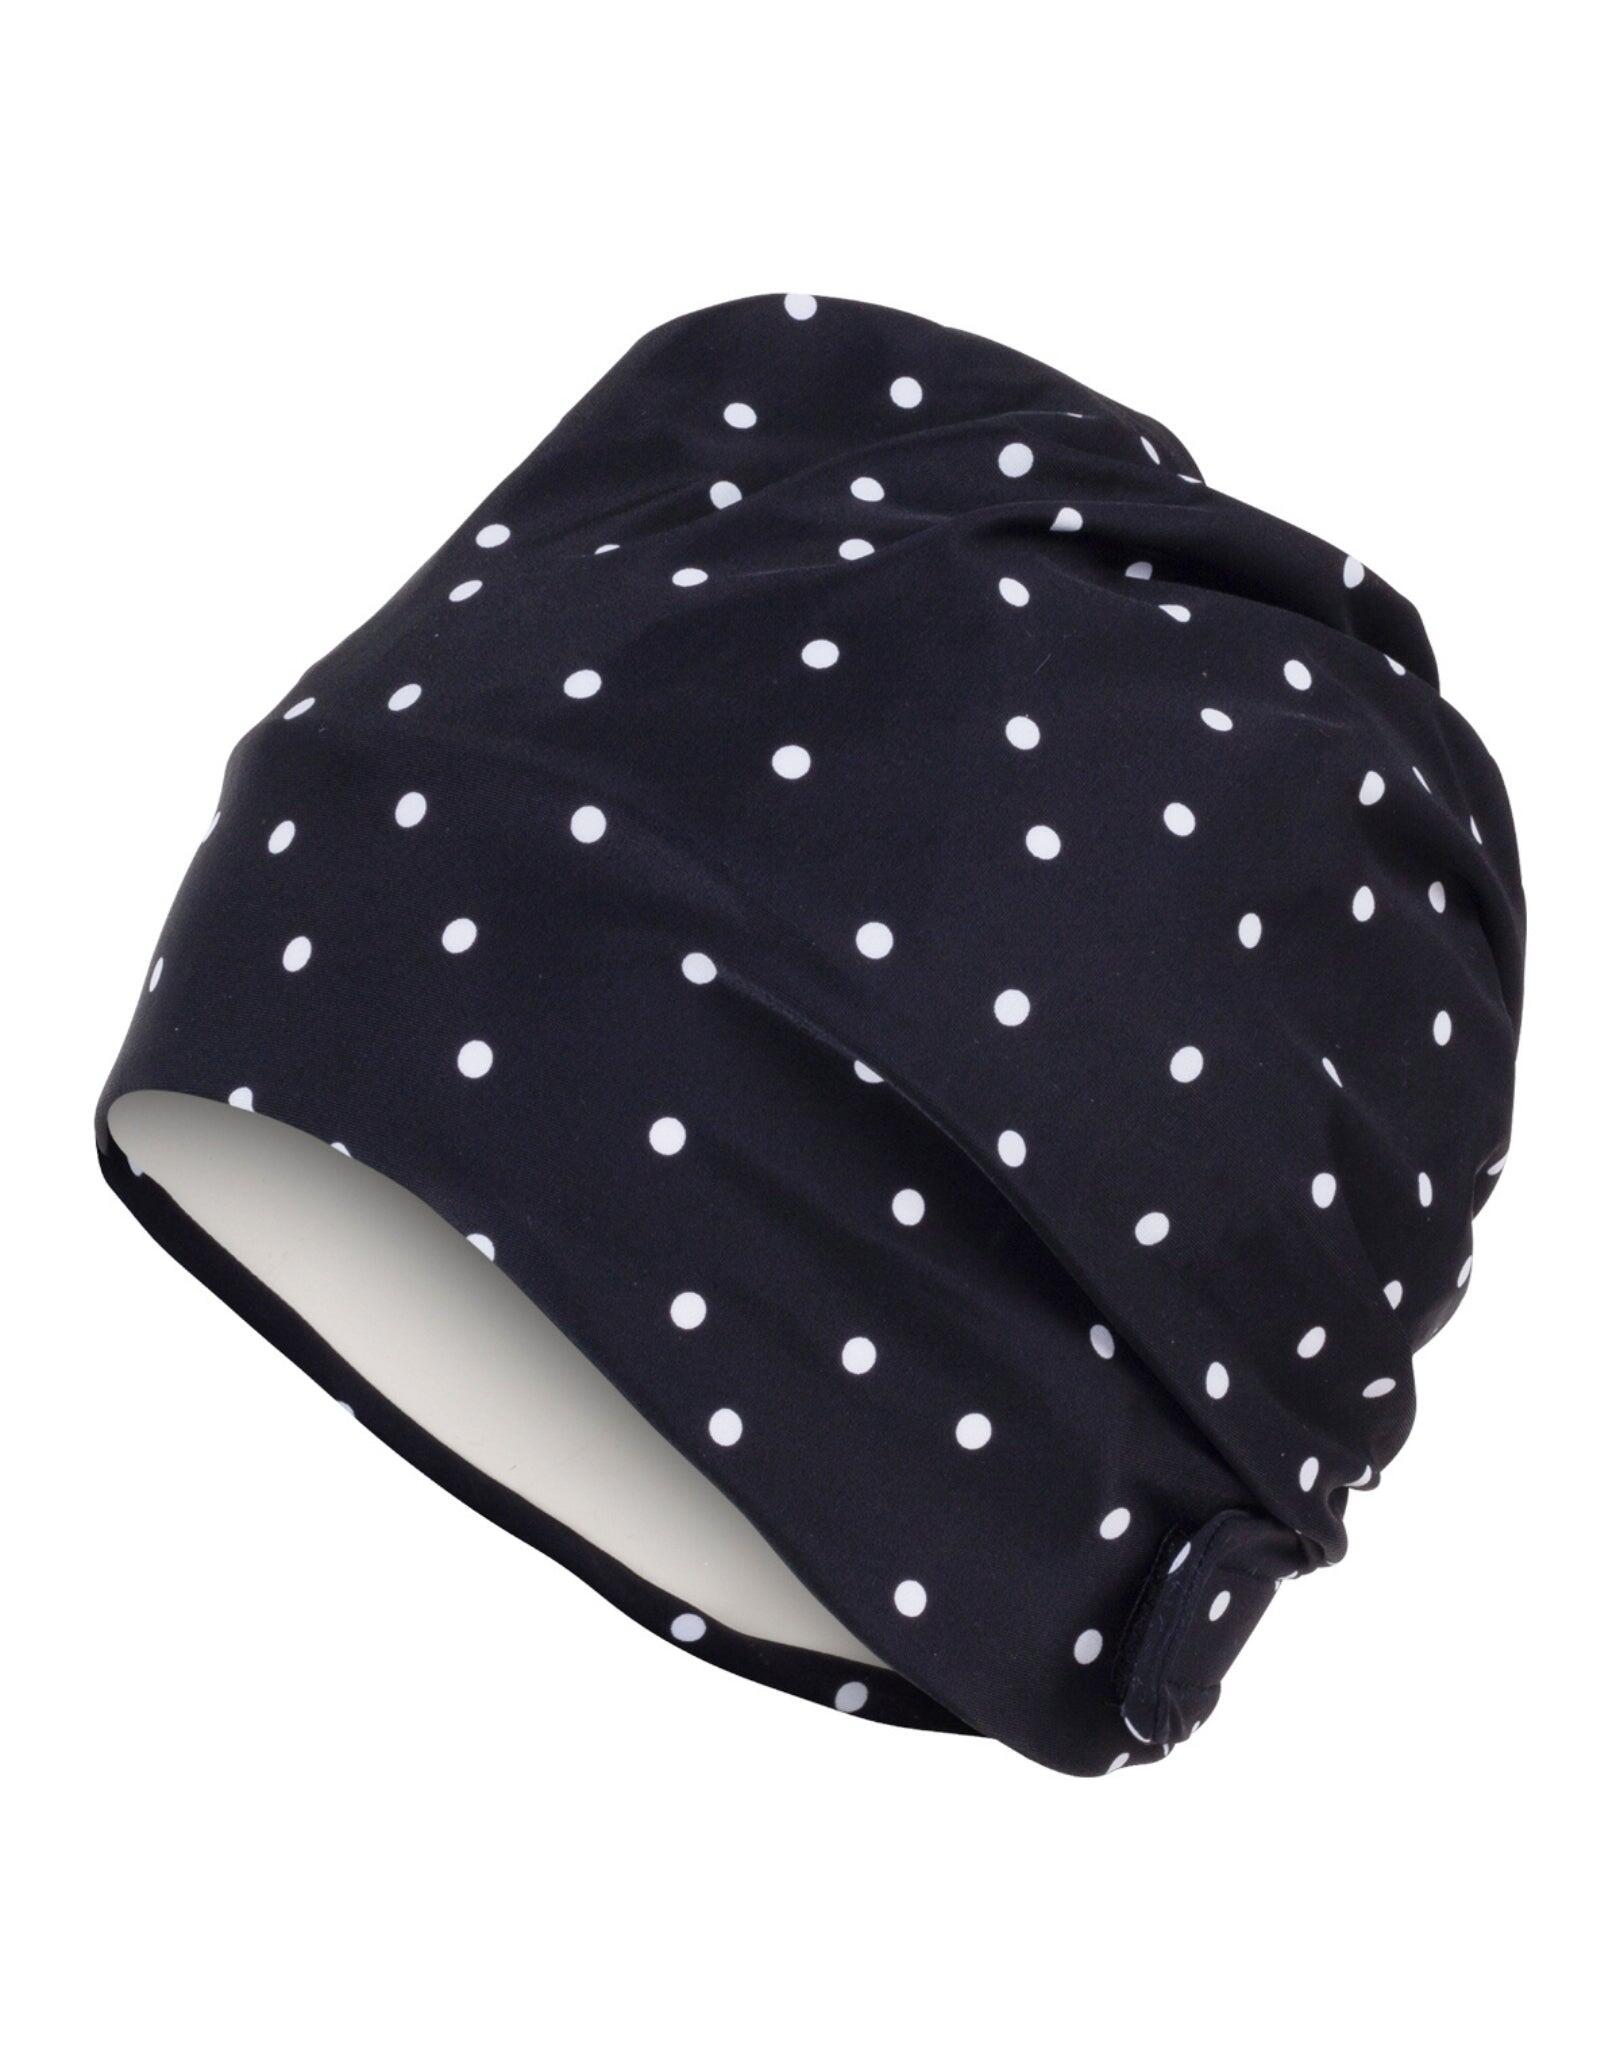 Fashy Polka Dot Fabric Swim Cap - Black/White 2/5